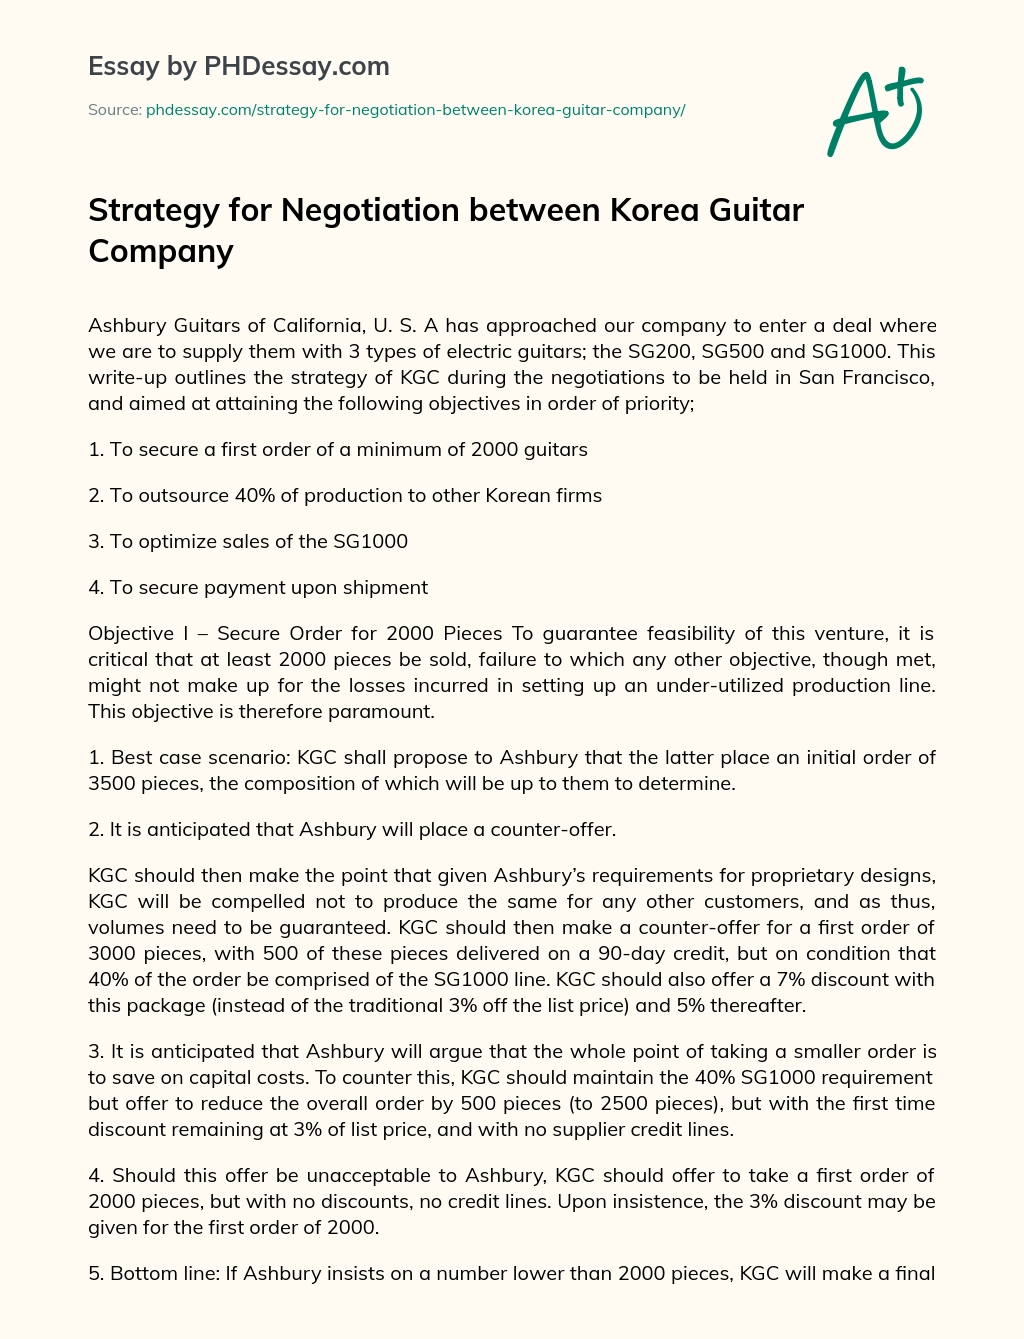 Strategy for Negotiation between Korea Guitar Company essay